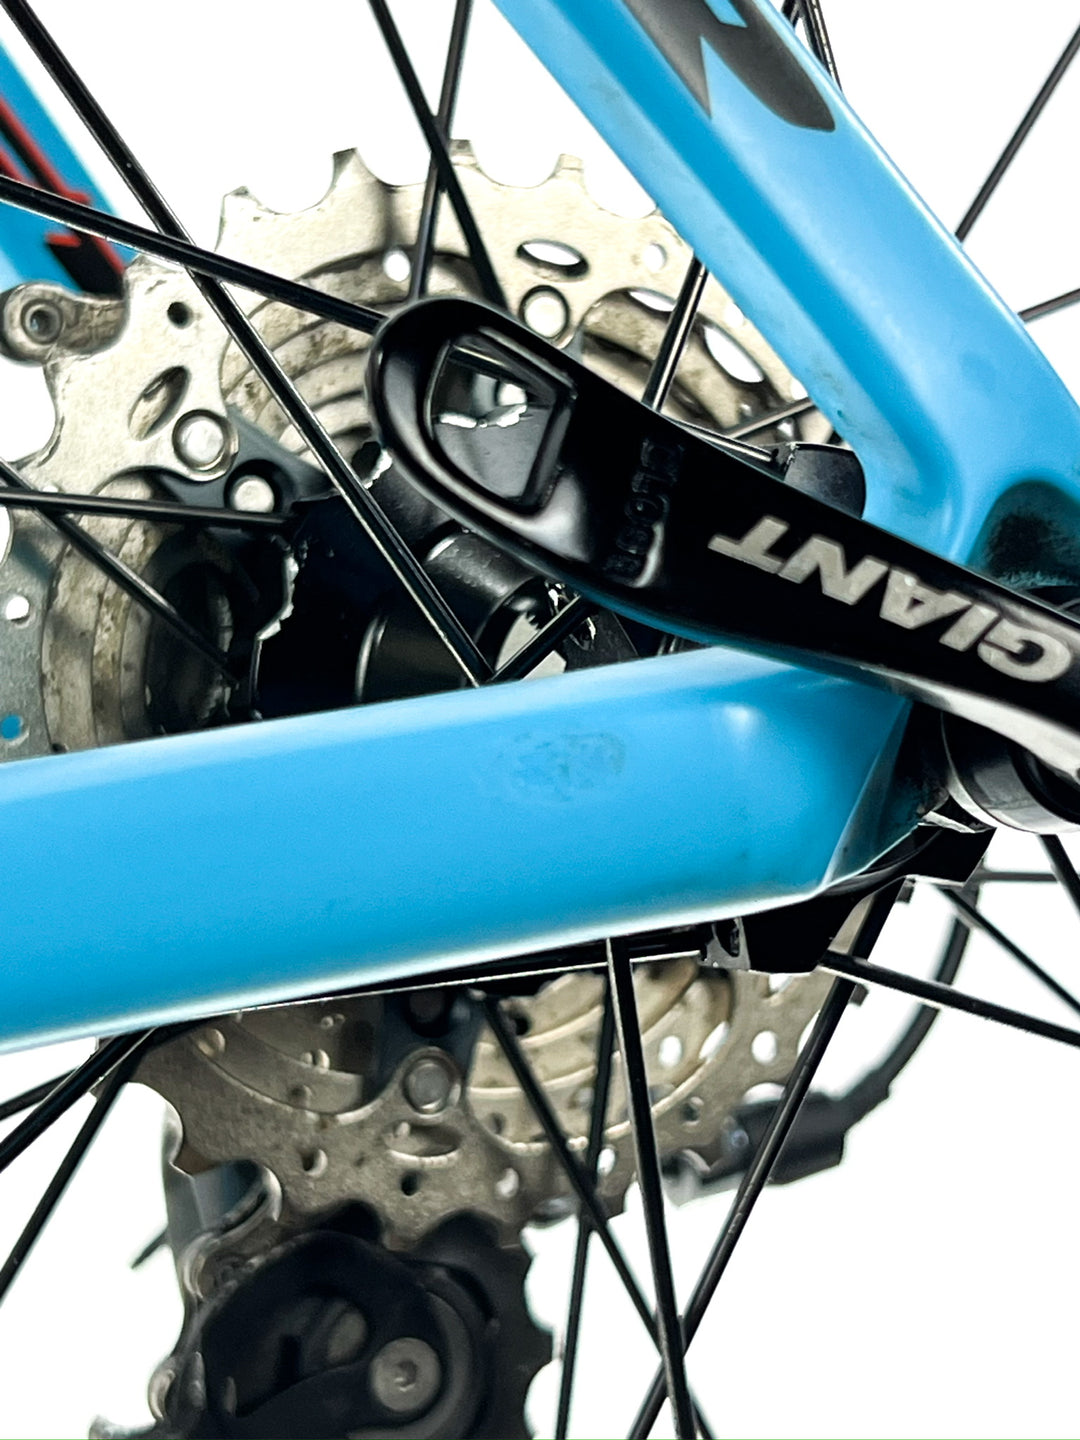 Giant TCR Advanced 1, Carbon Road Bike-2014, SRAM Force 22, 58cm